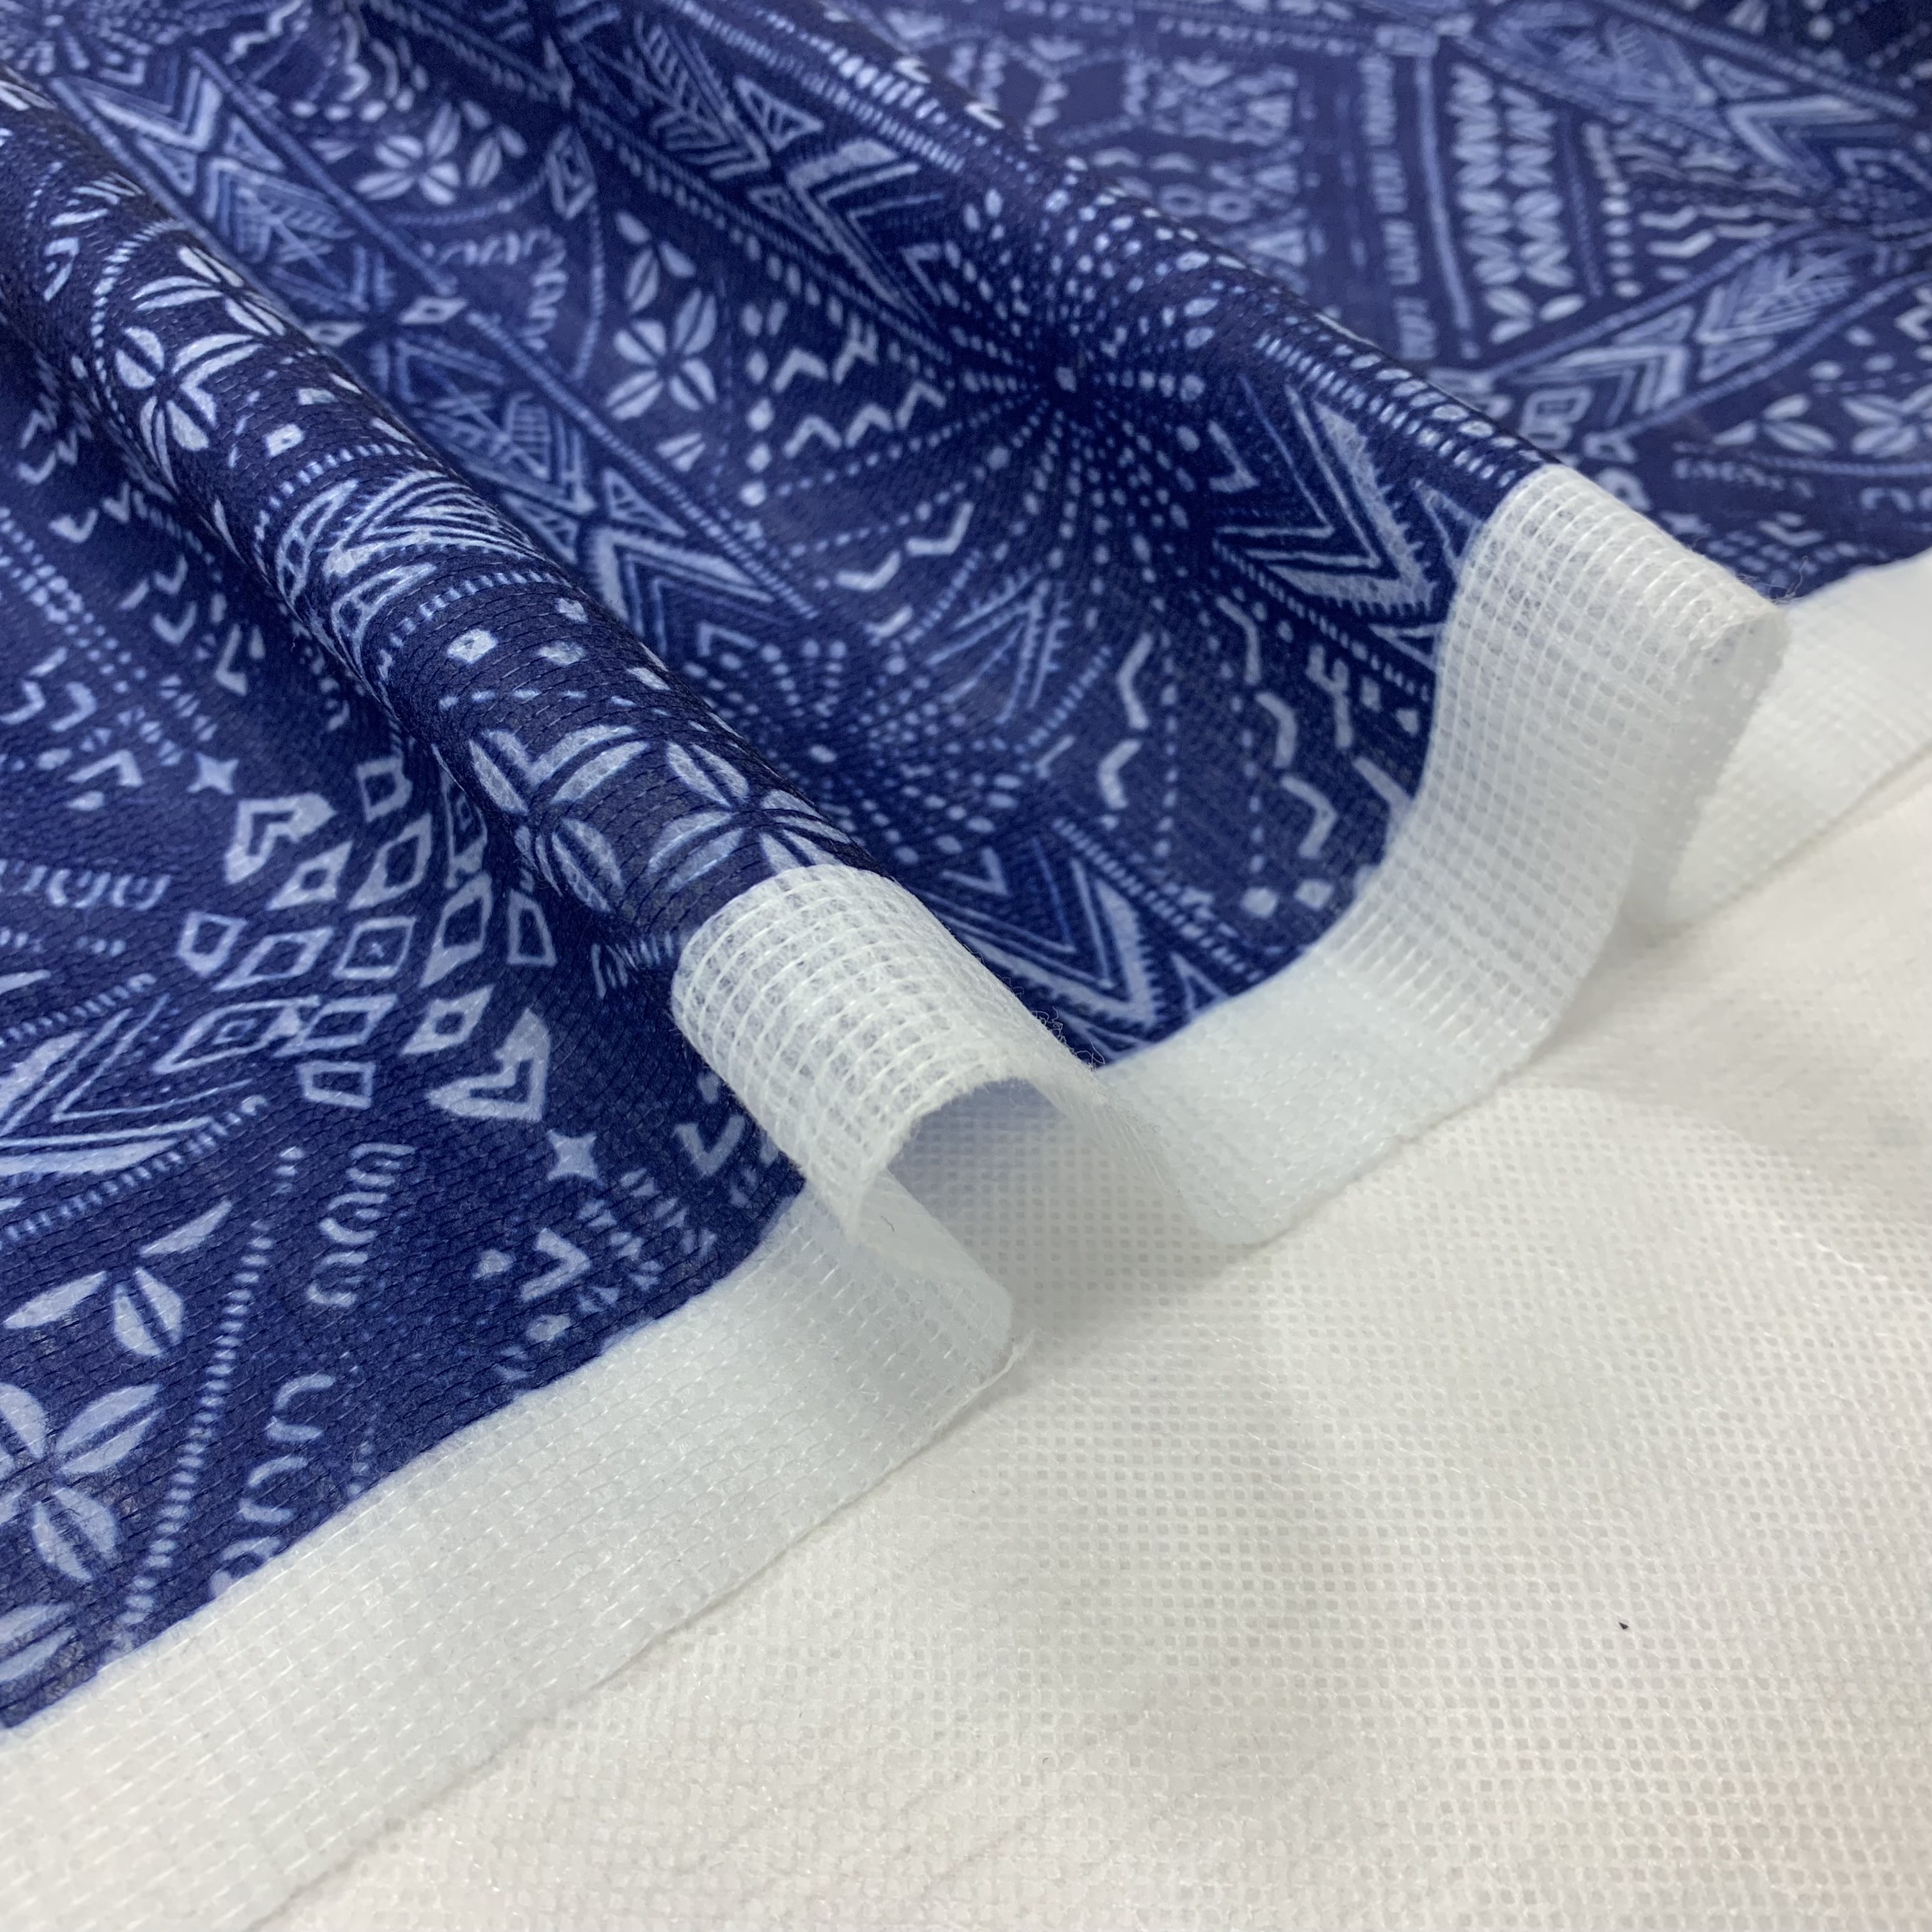 Polyester Stitchbond nonwoven non-woven fabric for nonwoven tablecloth/shopping bag